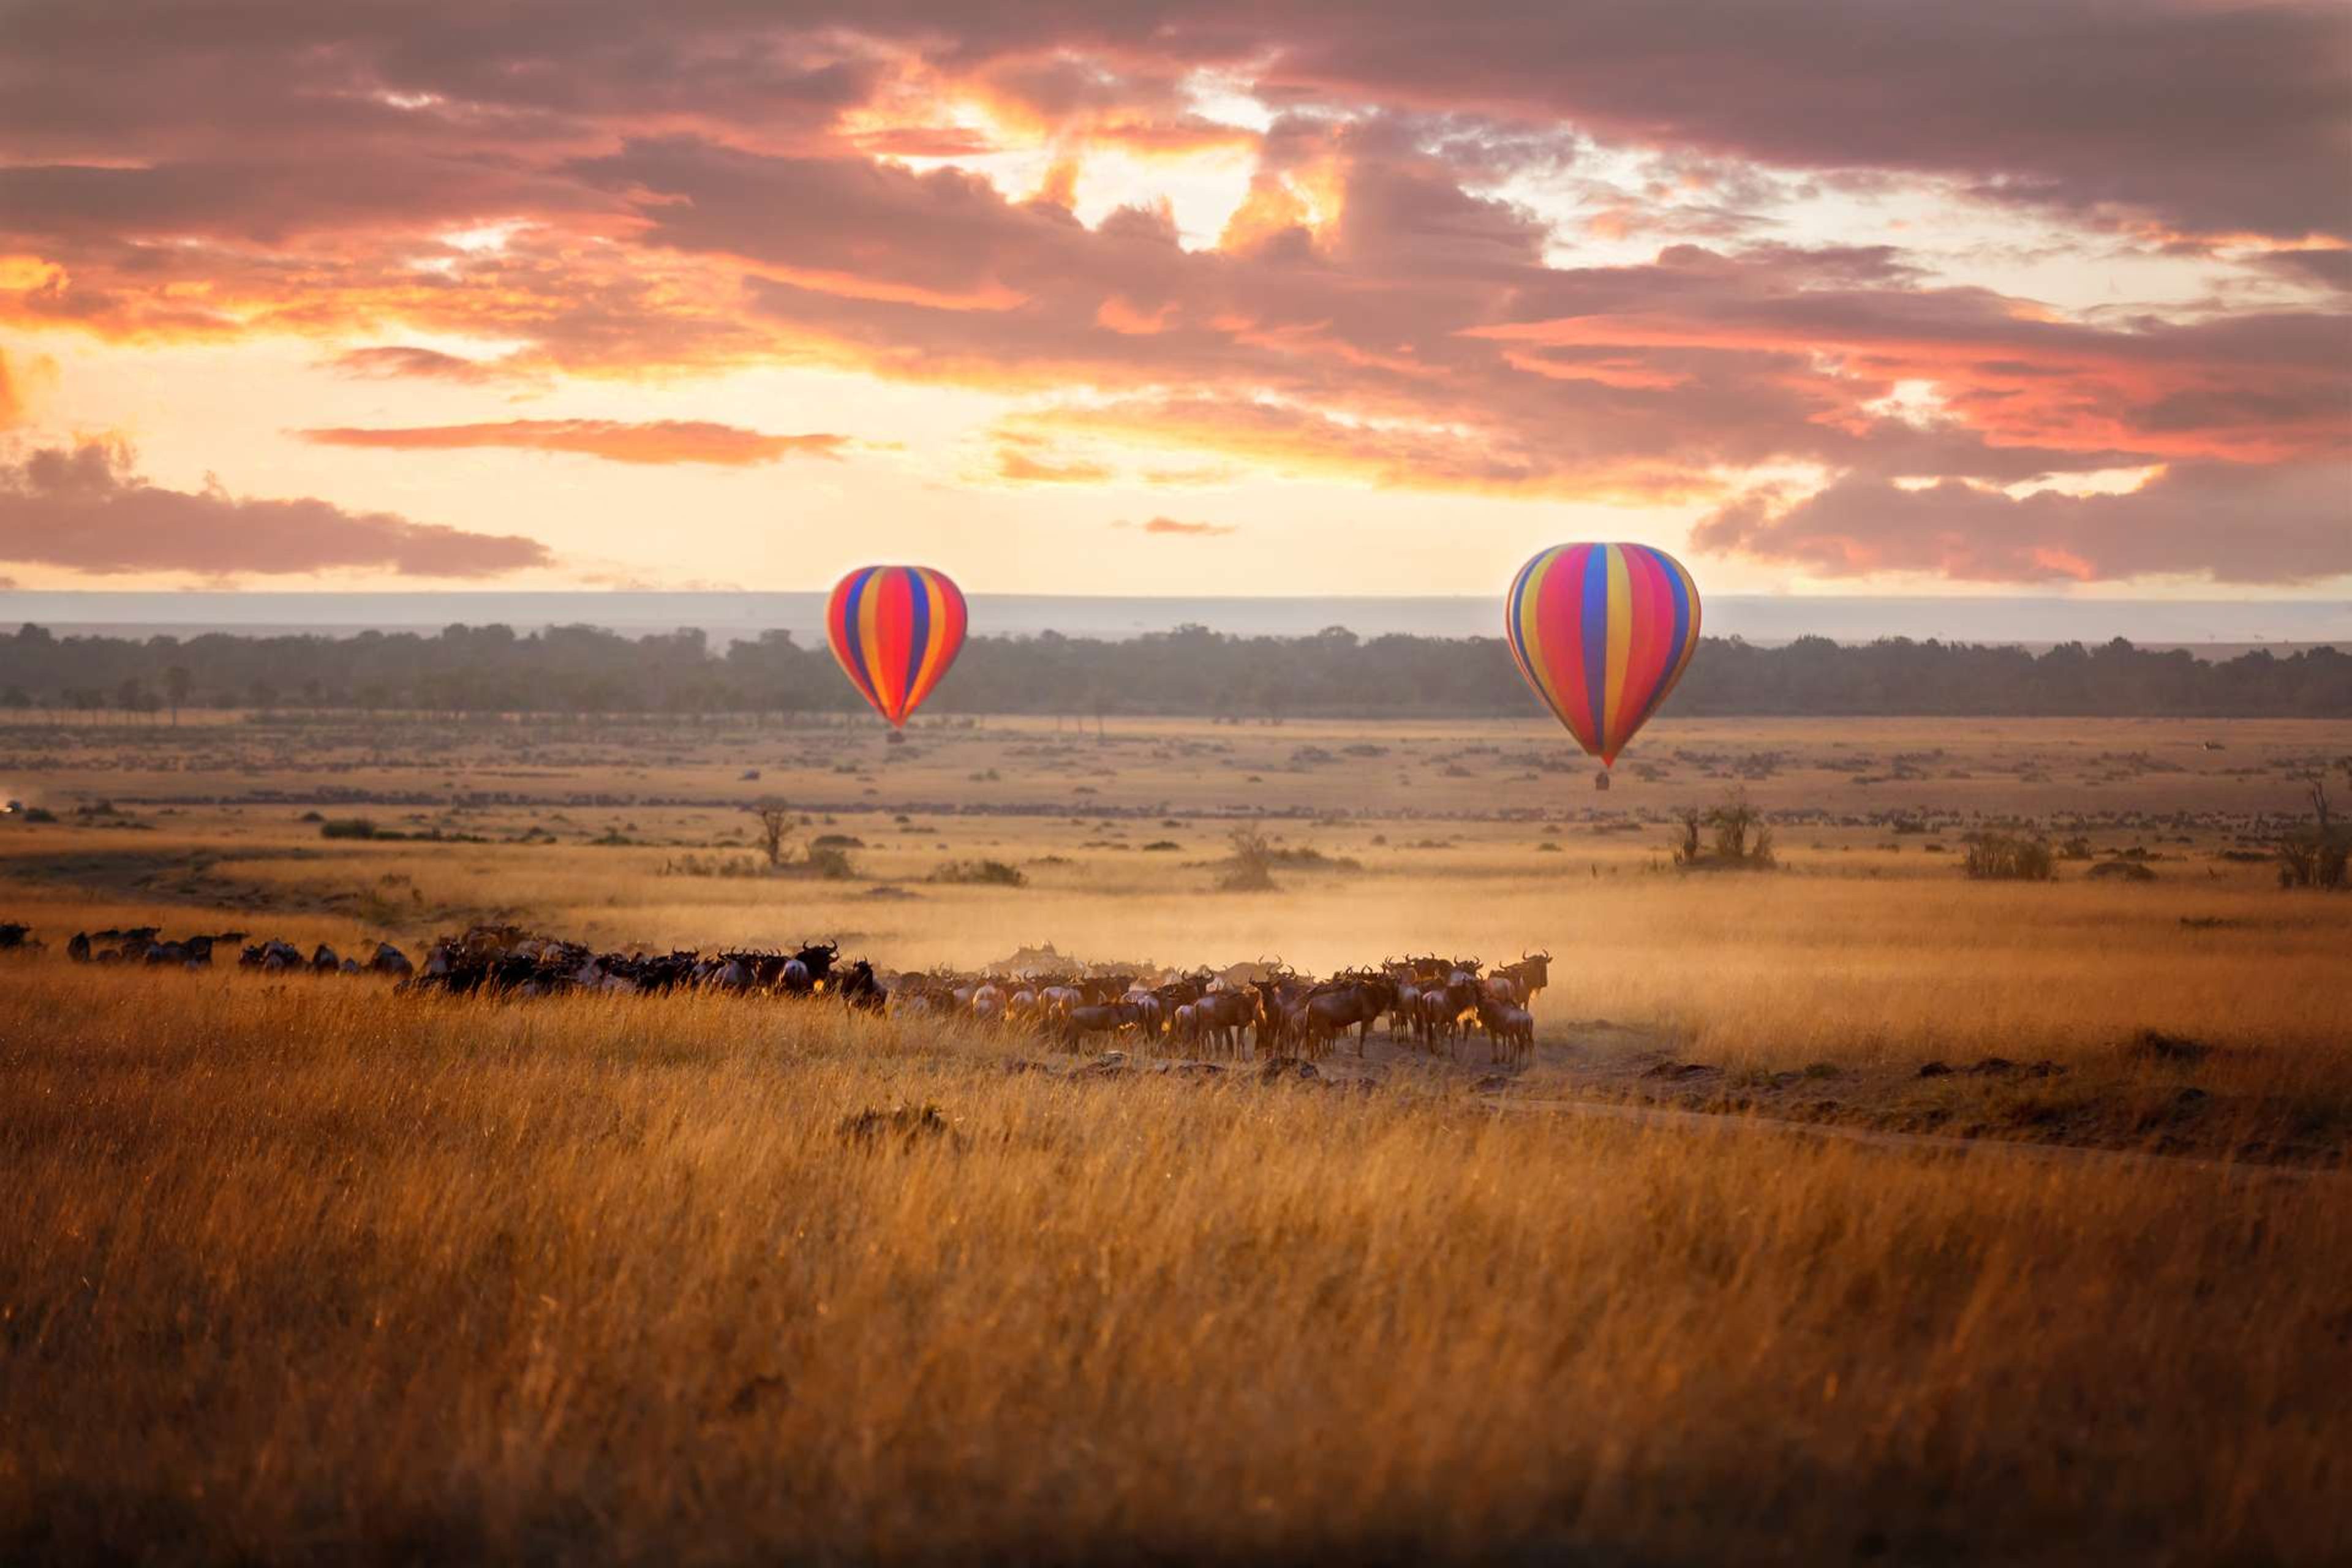 Kenia Masai Mara annual Great Migration luchtballonnen